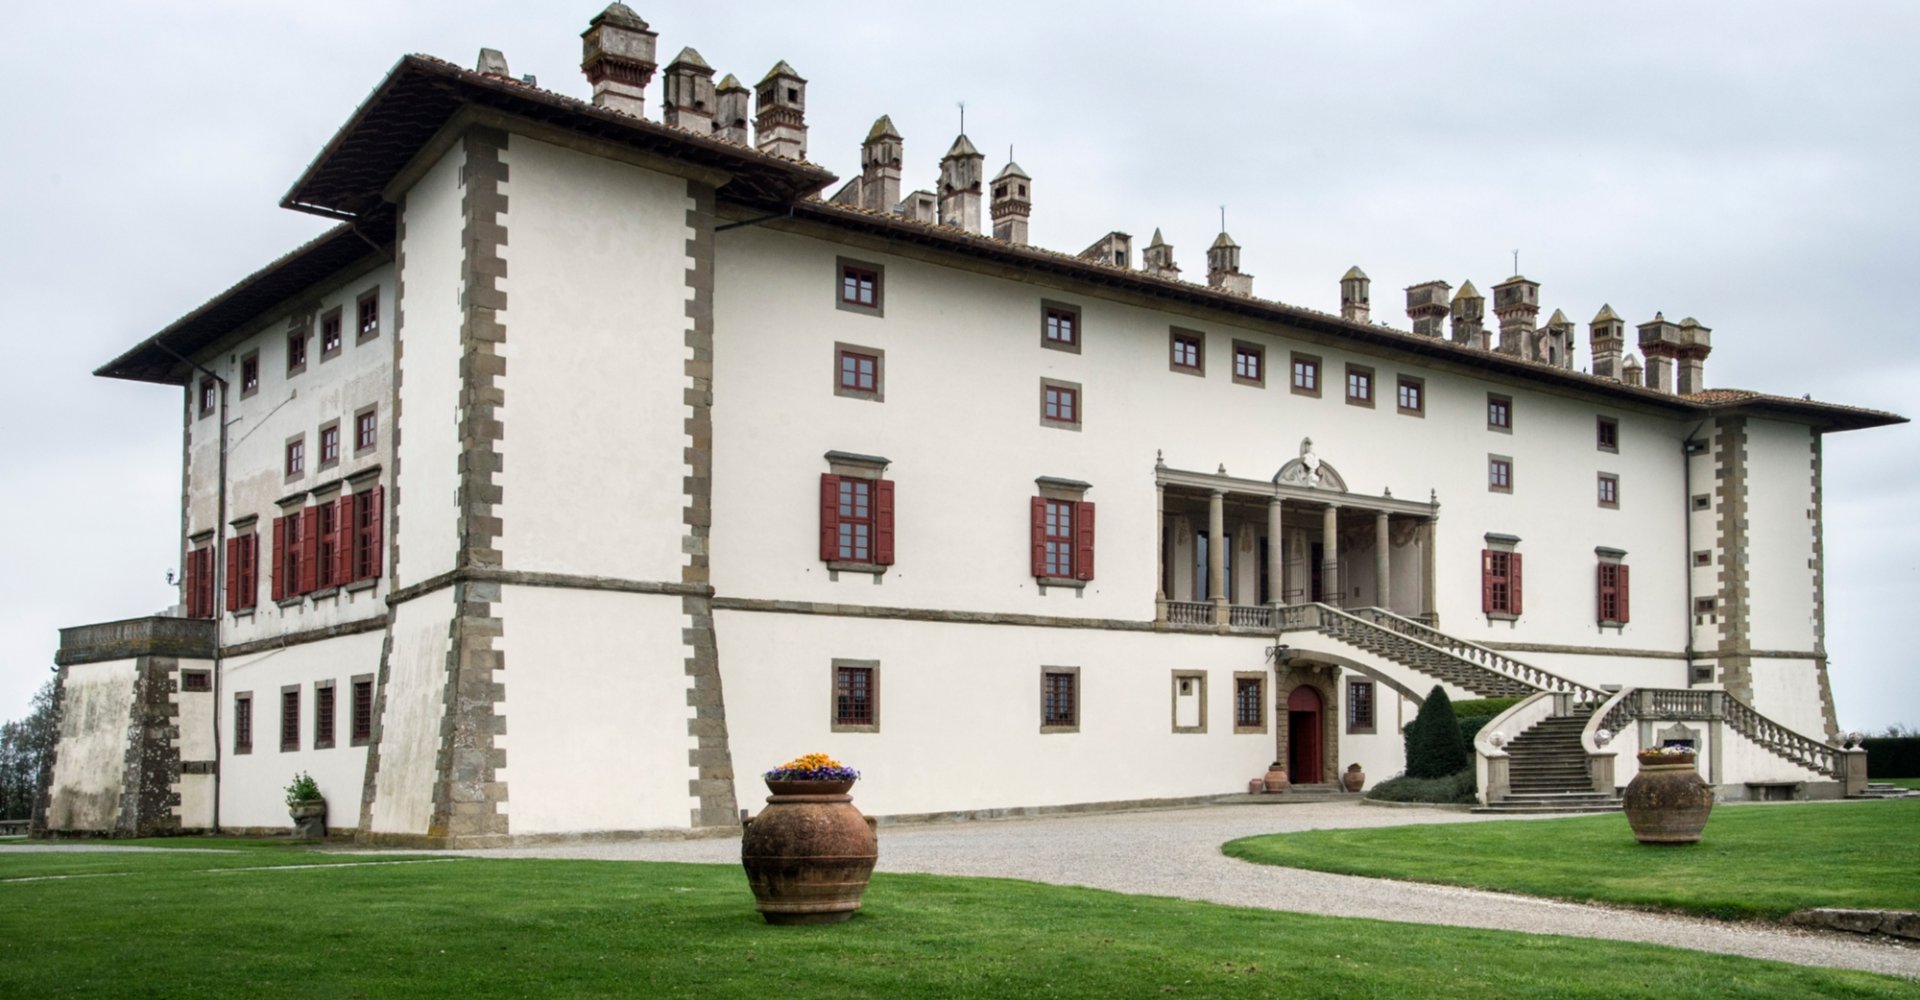 Medici-Villa La Ferdinanda in Artimino